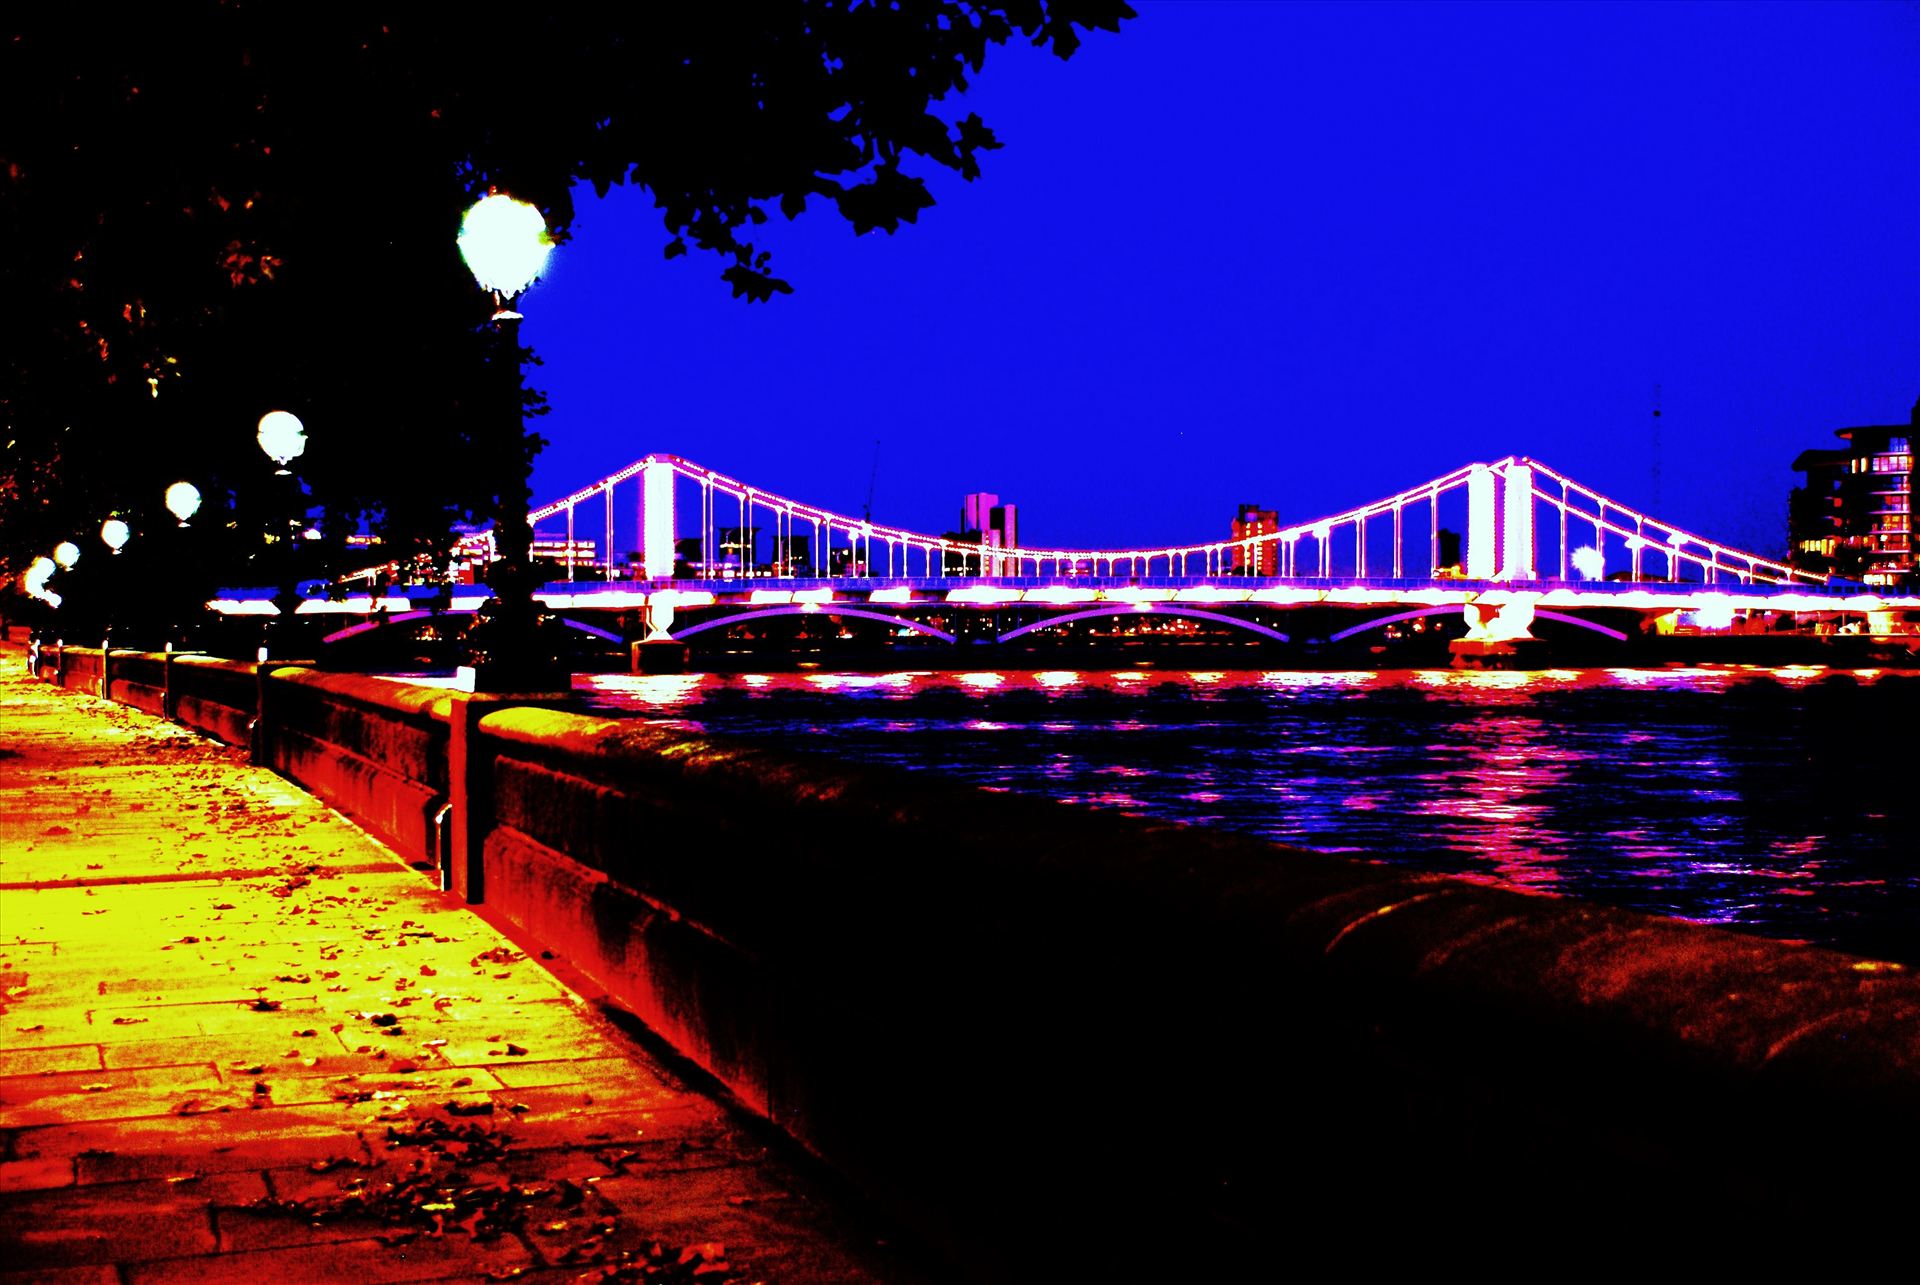 London Embankment 1 Romantic London Embankment image by PopArtMediaProductions